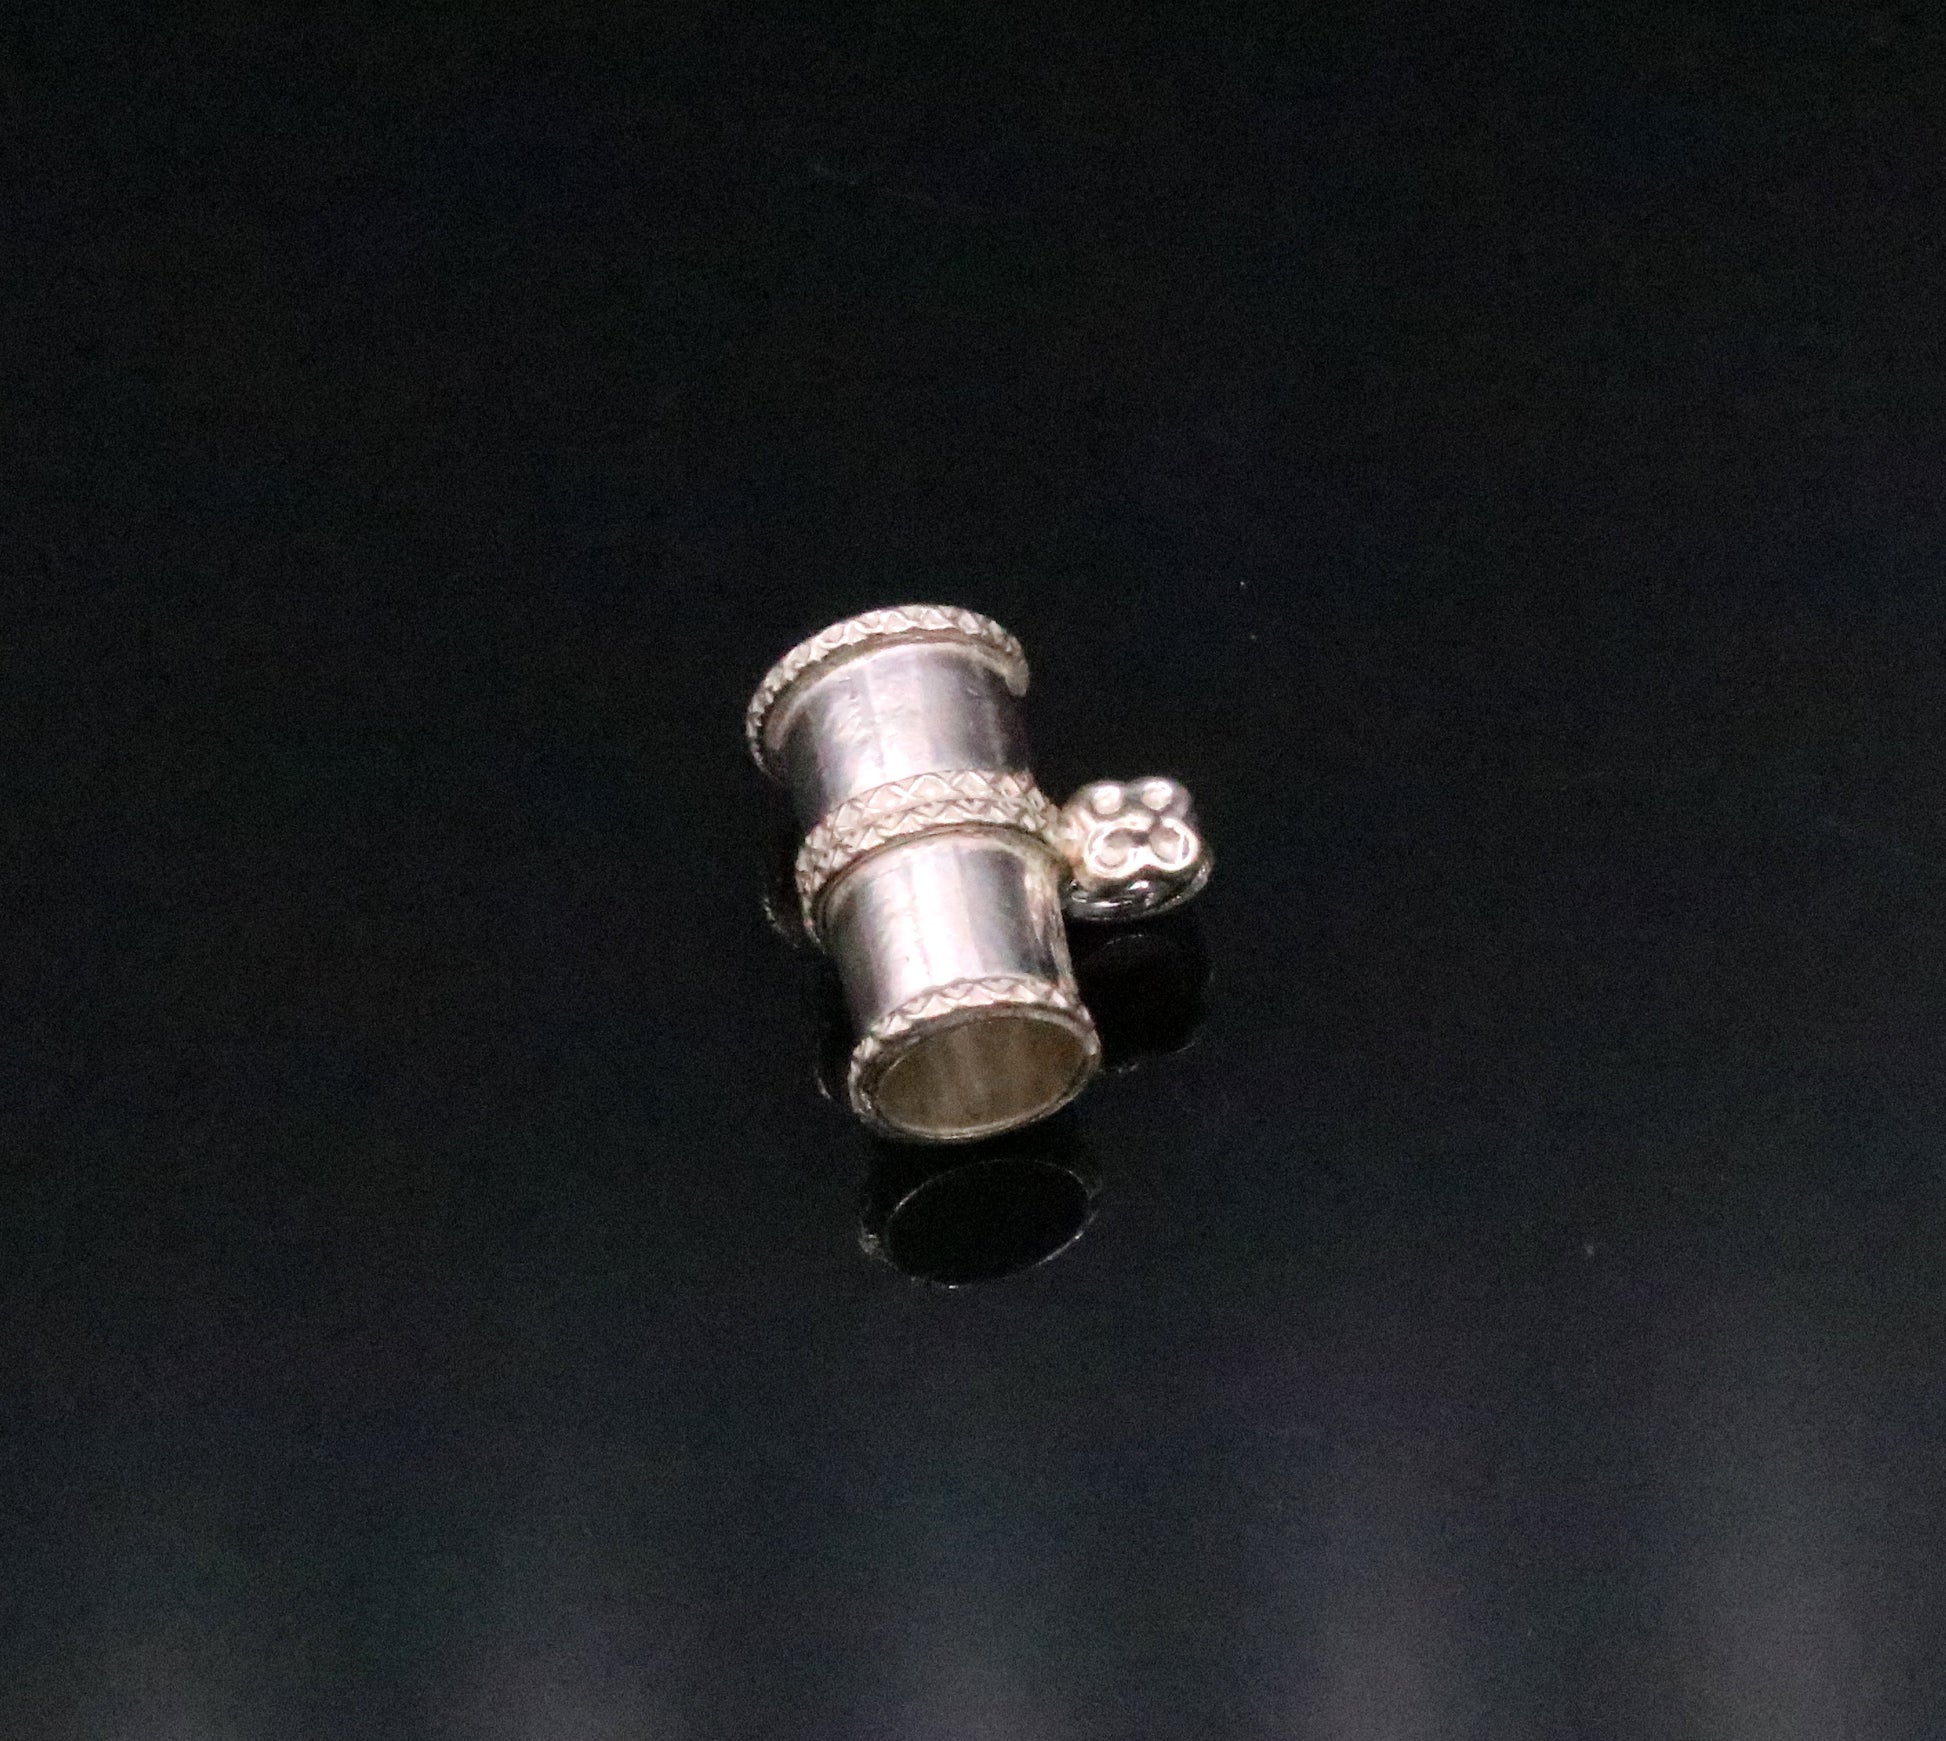 Amazing Sterling silver handmade tiny pipe shape pendant vintage antique design pine pendant unisex tribal jewelry nsp103 - TRIBAL ORNAMENTS